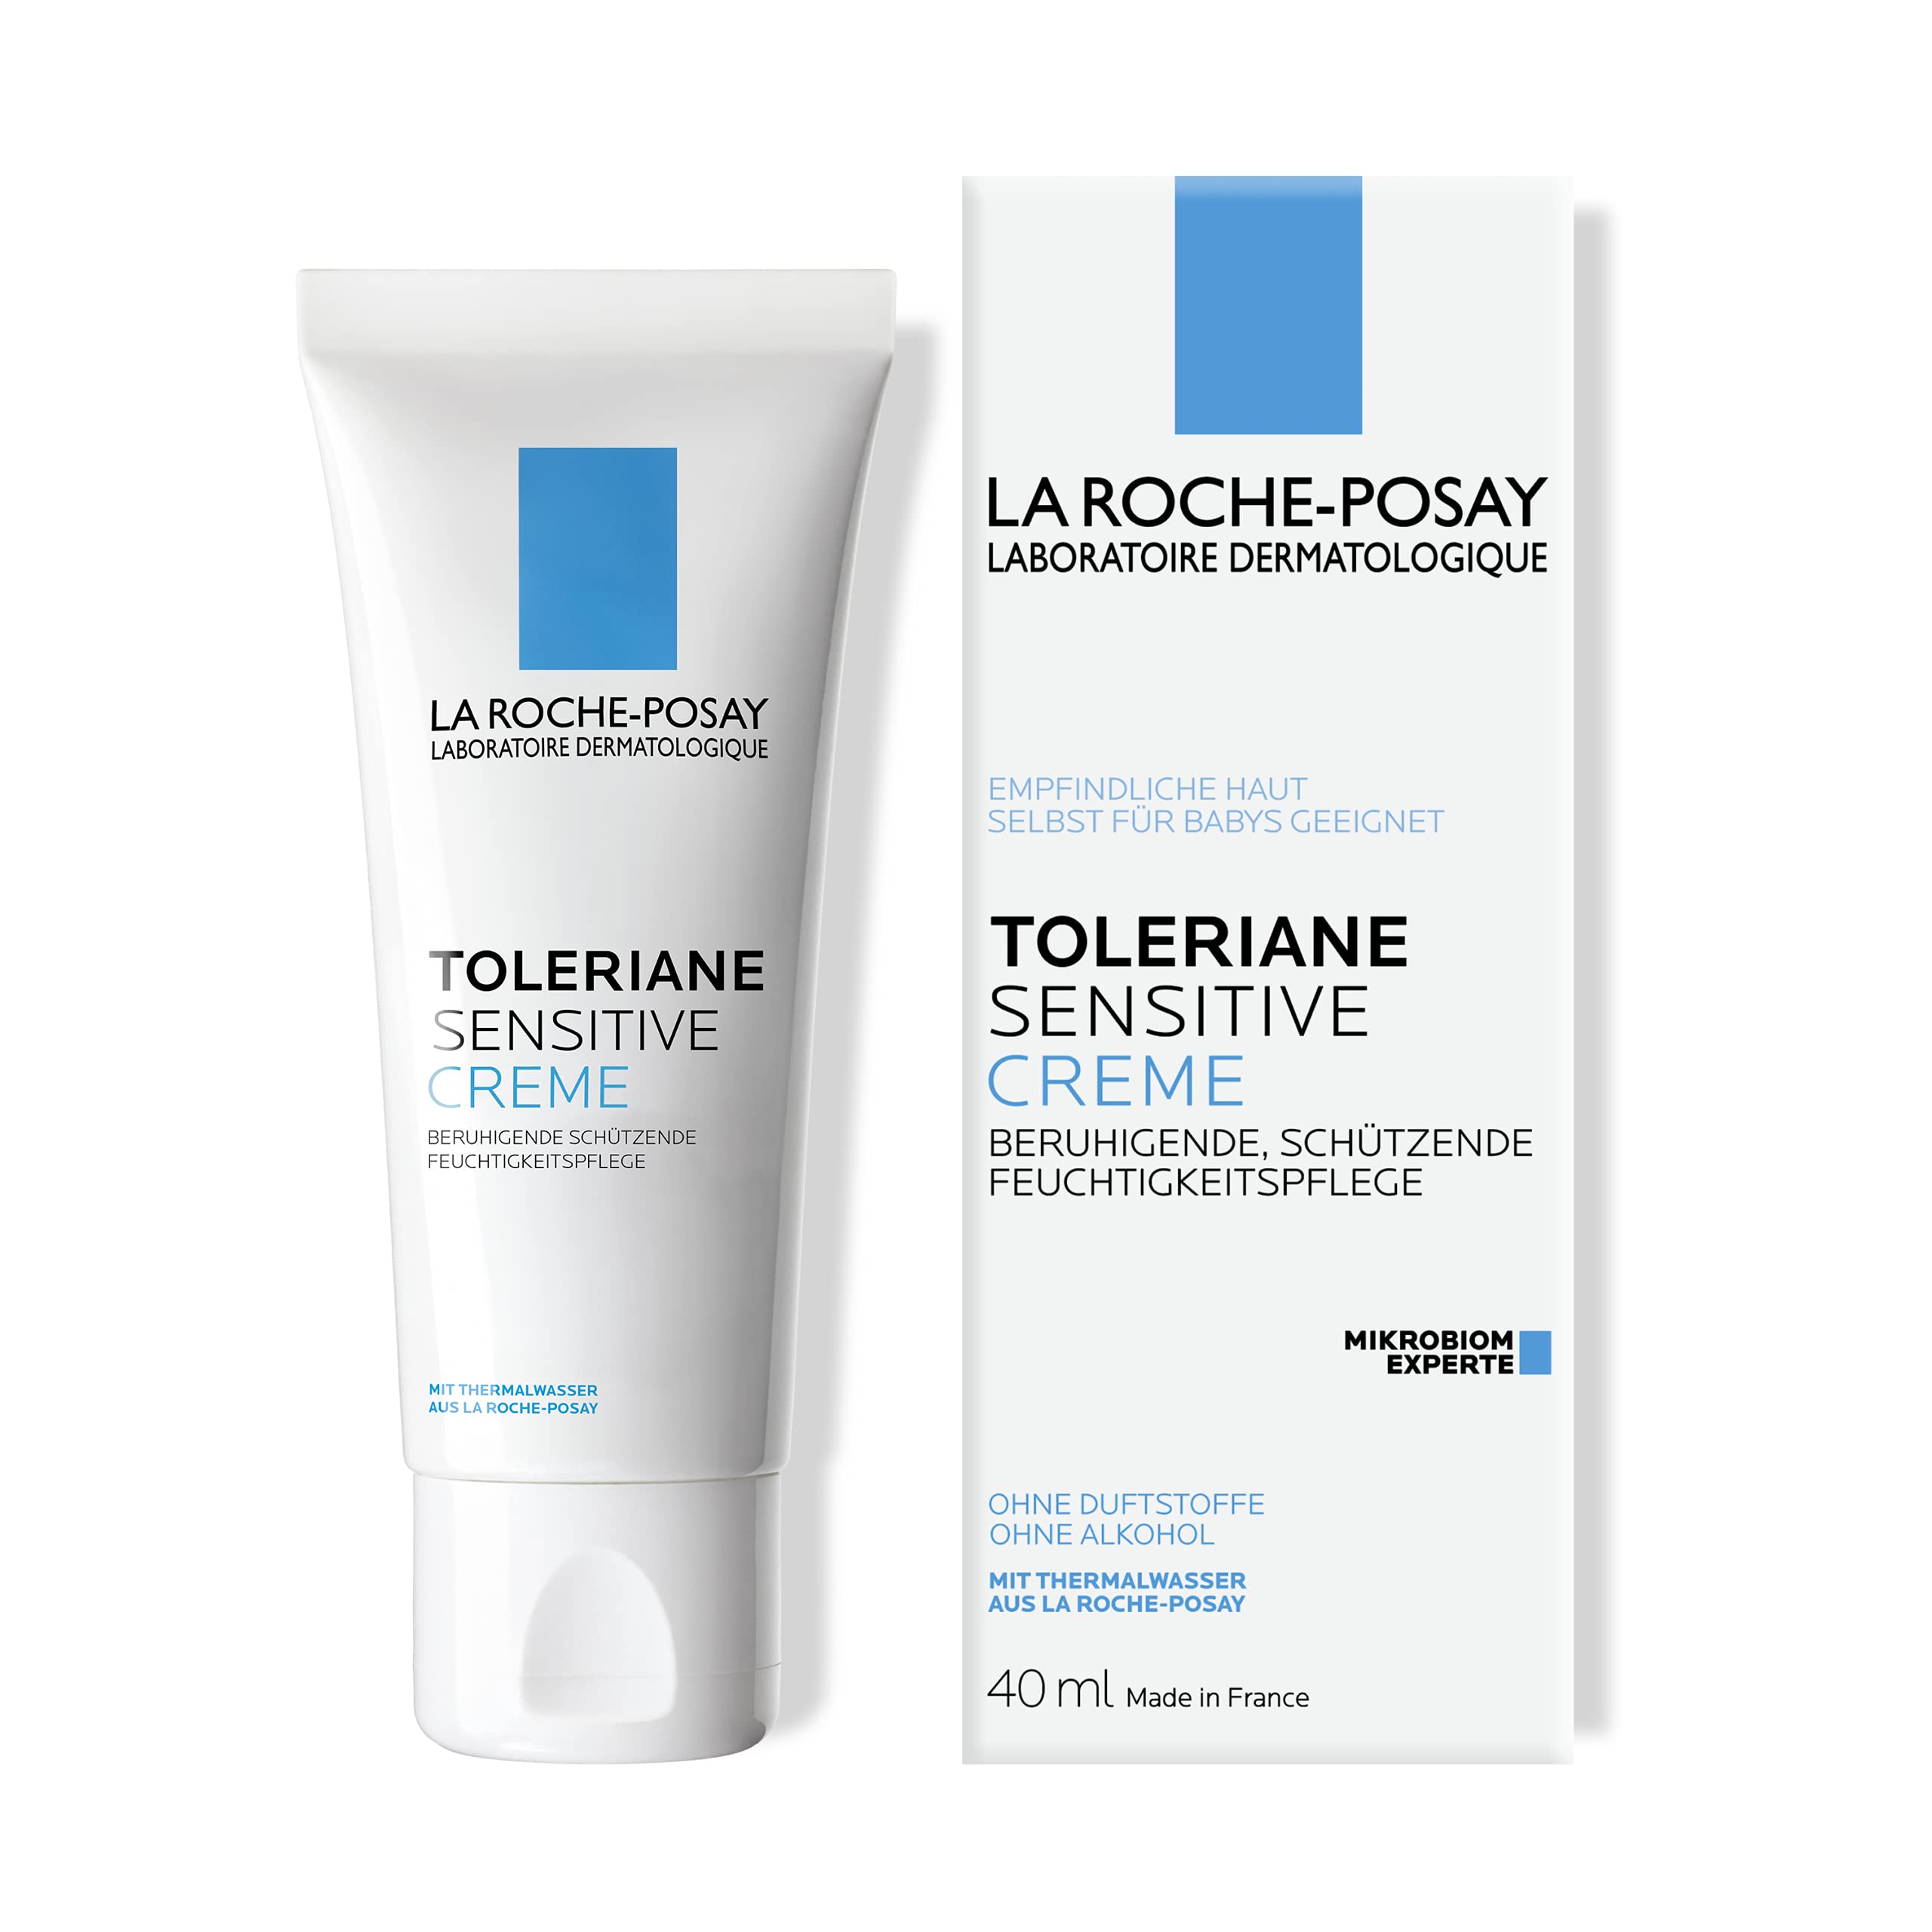 La Roche-Posay Toleriane Sensitive Face Cream 40 ml - Soothing Moisturising Cream for Dry, Sensitive Skin